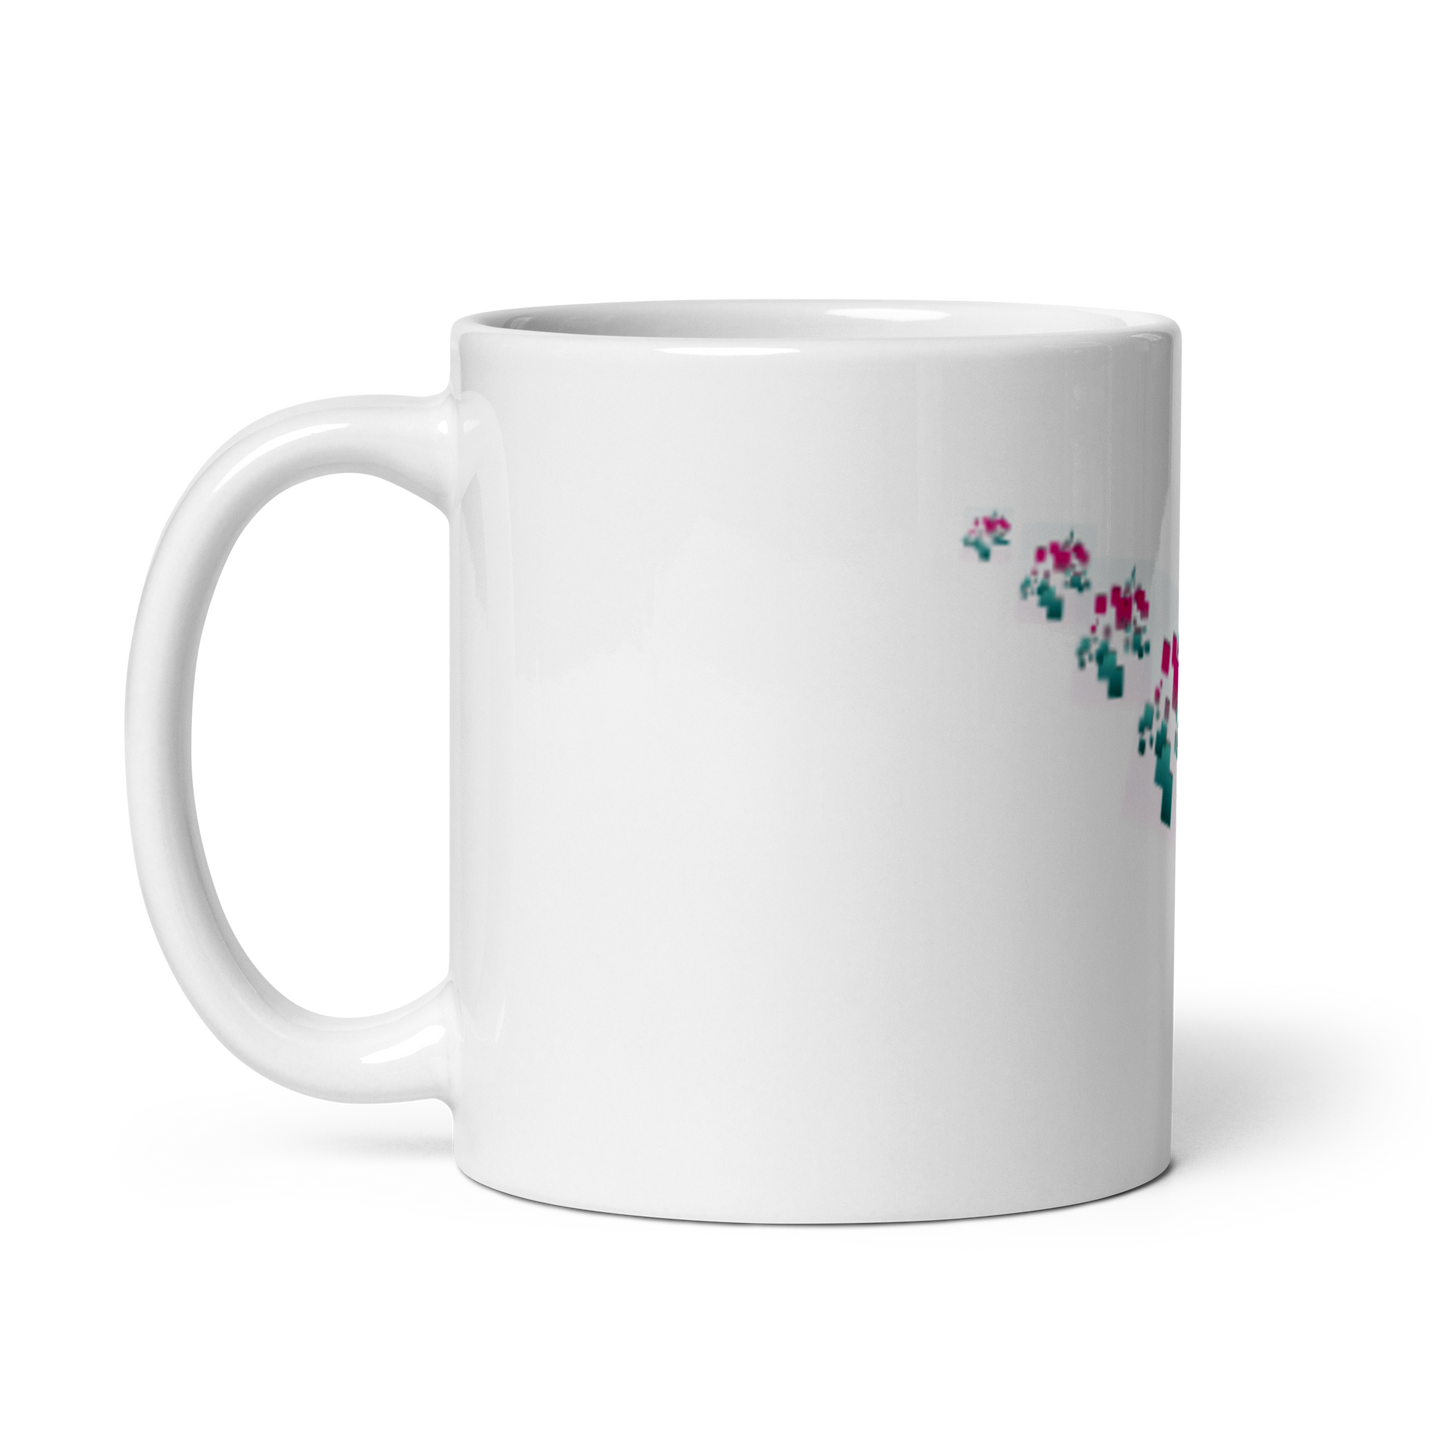 Limited Edition PixelDust PixelHeart White glossy mug